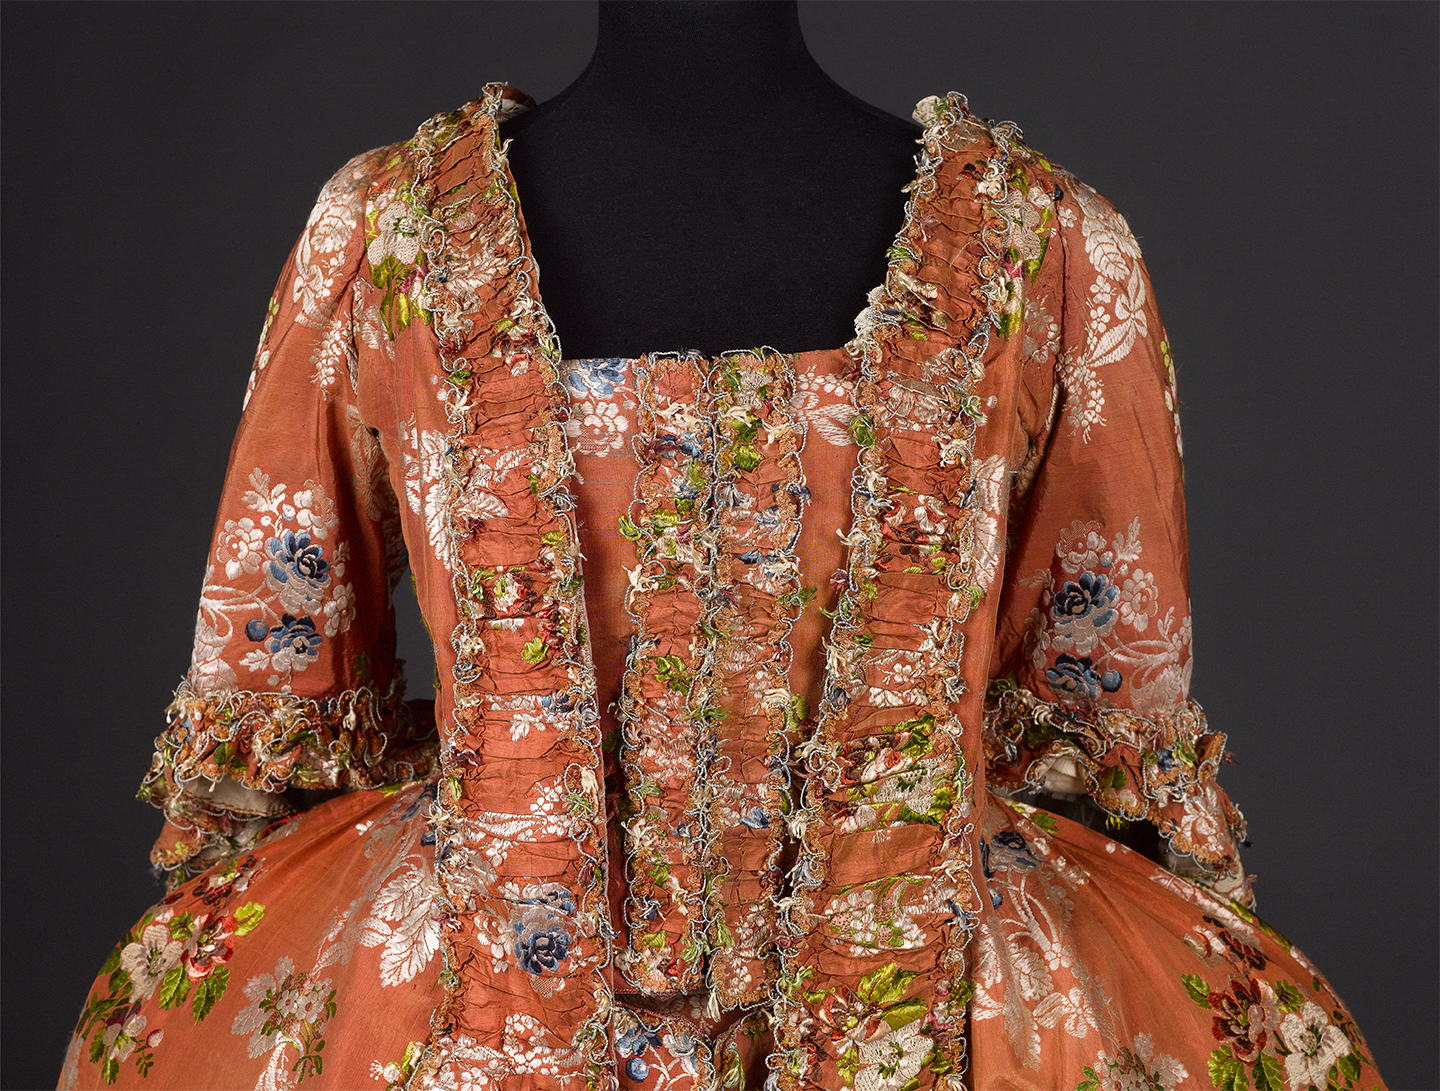 French-style dress, circa 1755-65 © Palais Galliera / Paris Musées